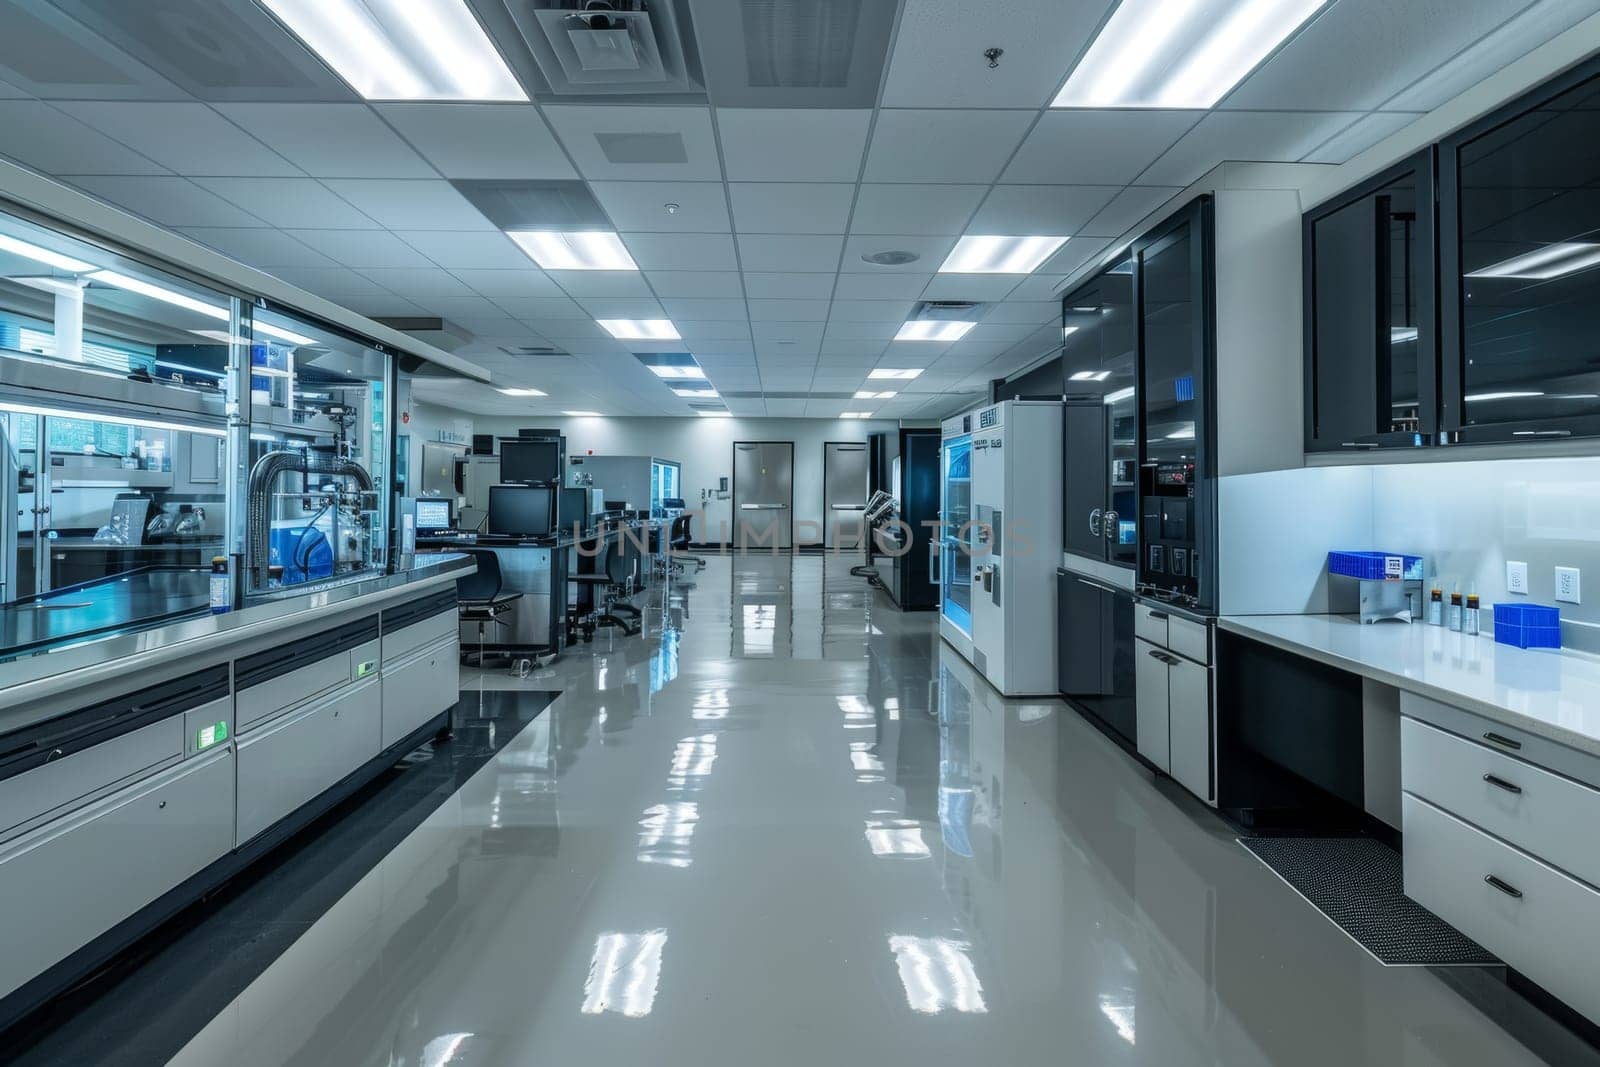 High-Tech Laboratory Interior by andreyz